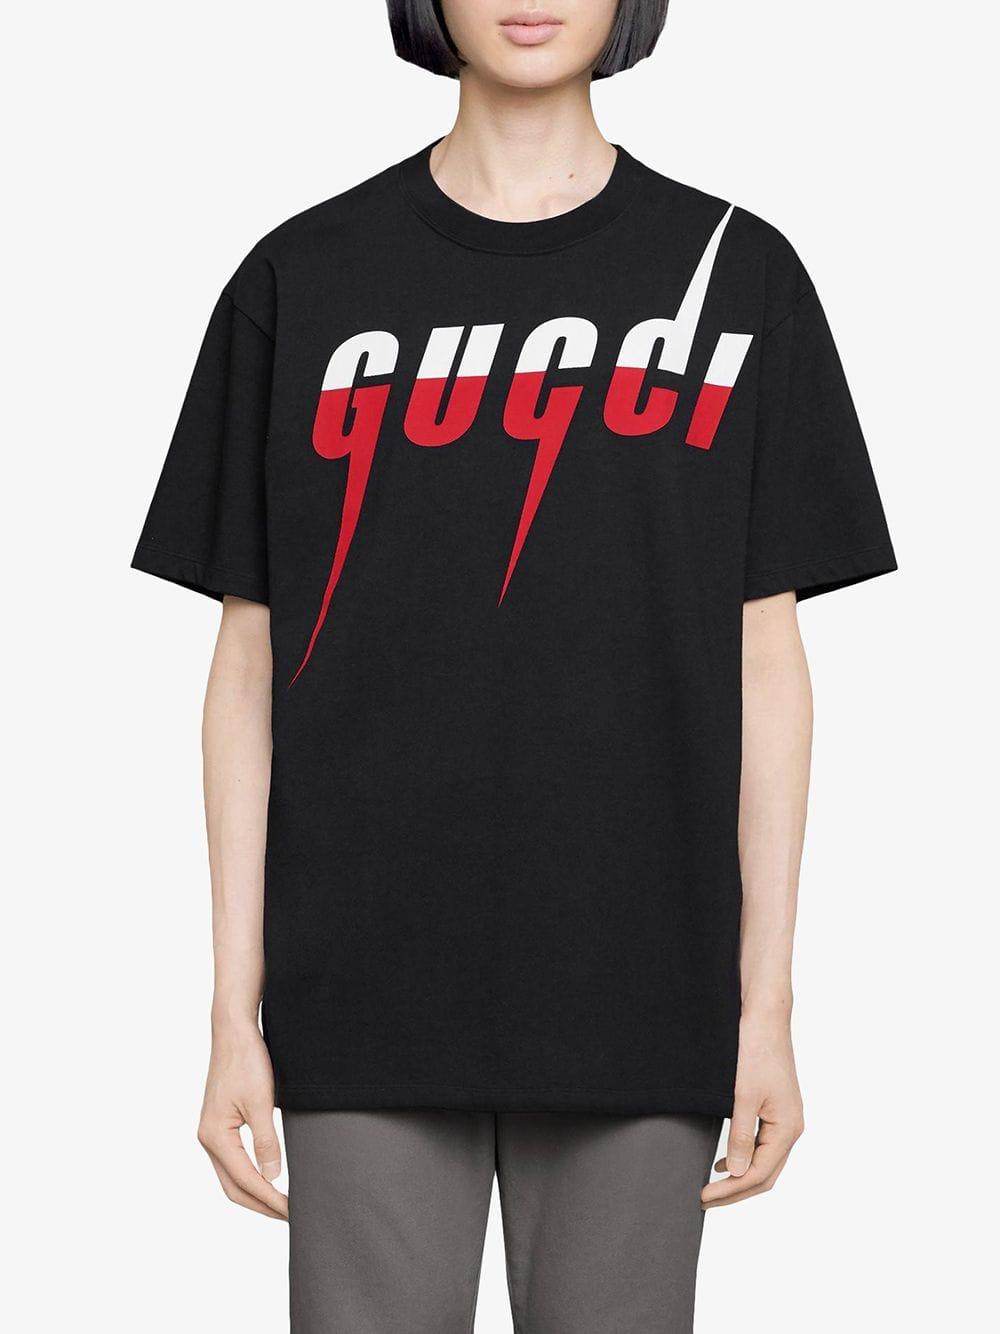 Gucci Black Logo T-shirt for Men - Save 34% - Lyst